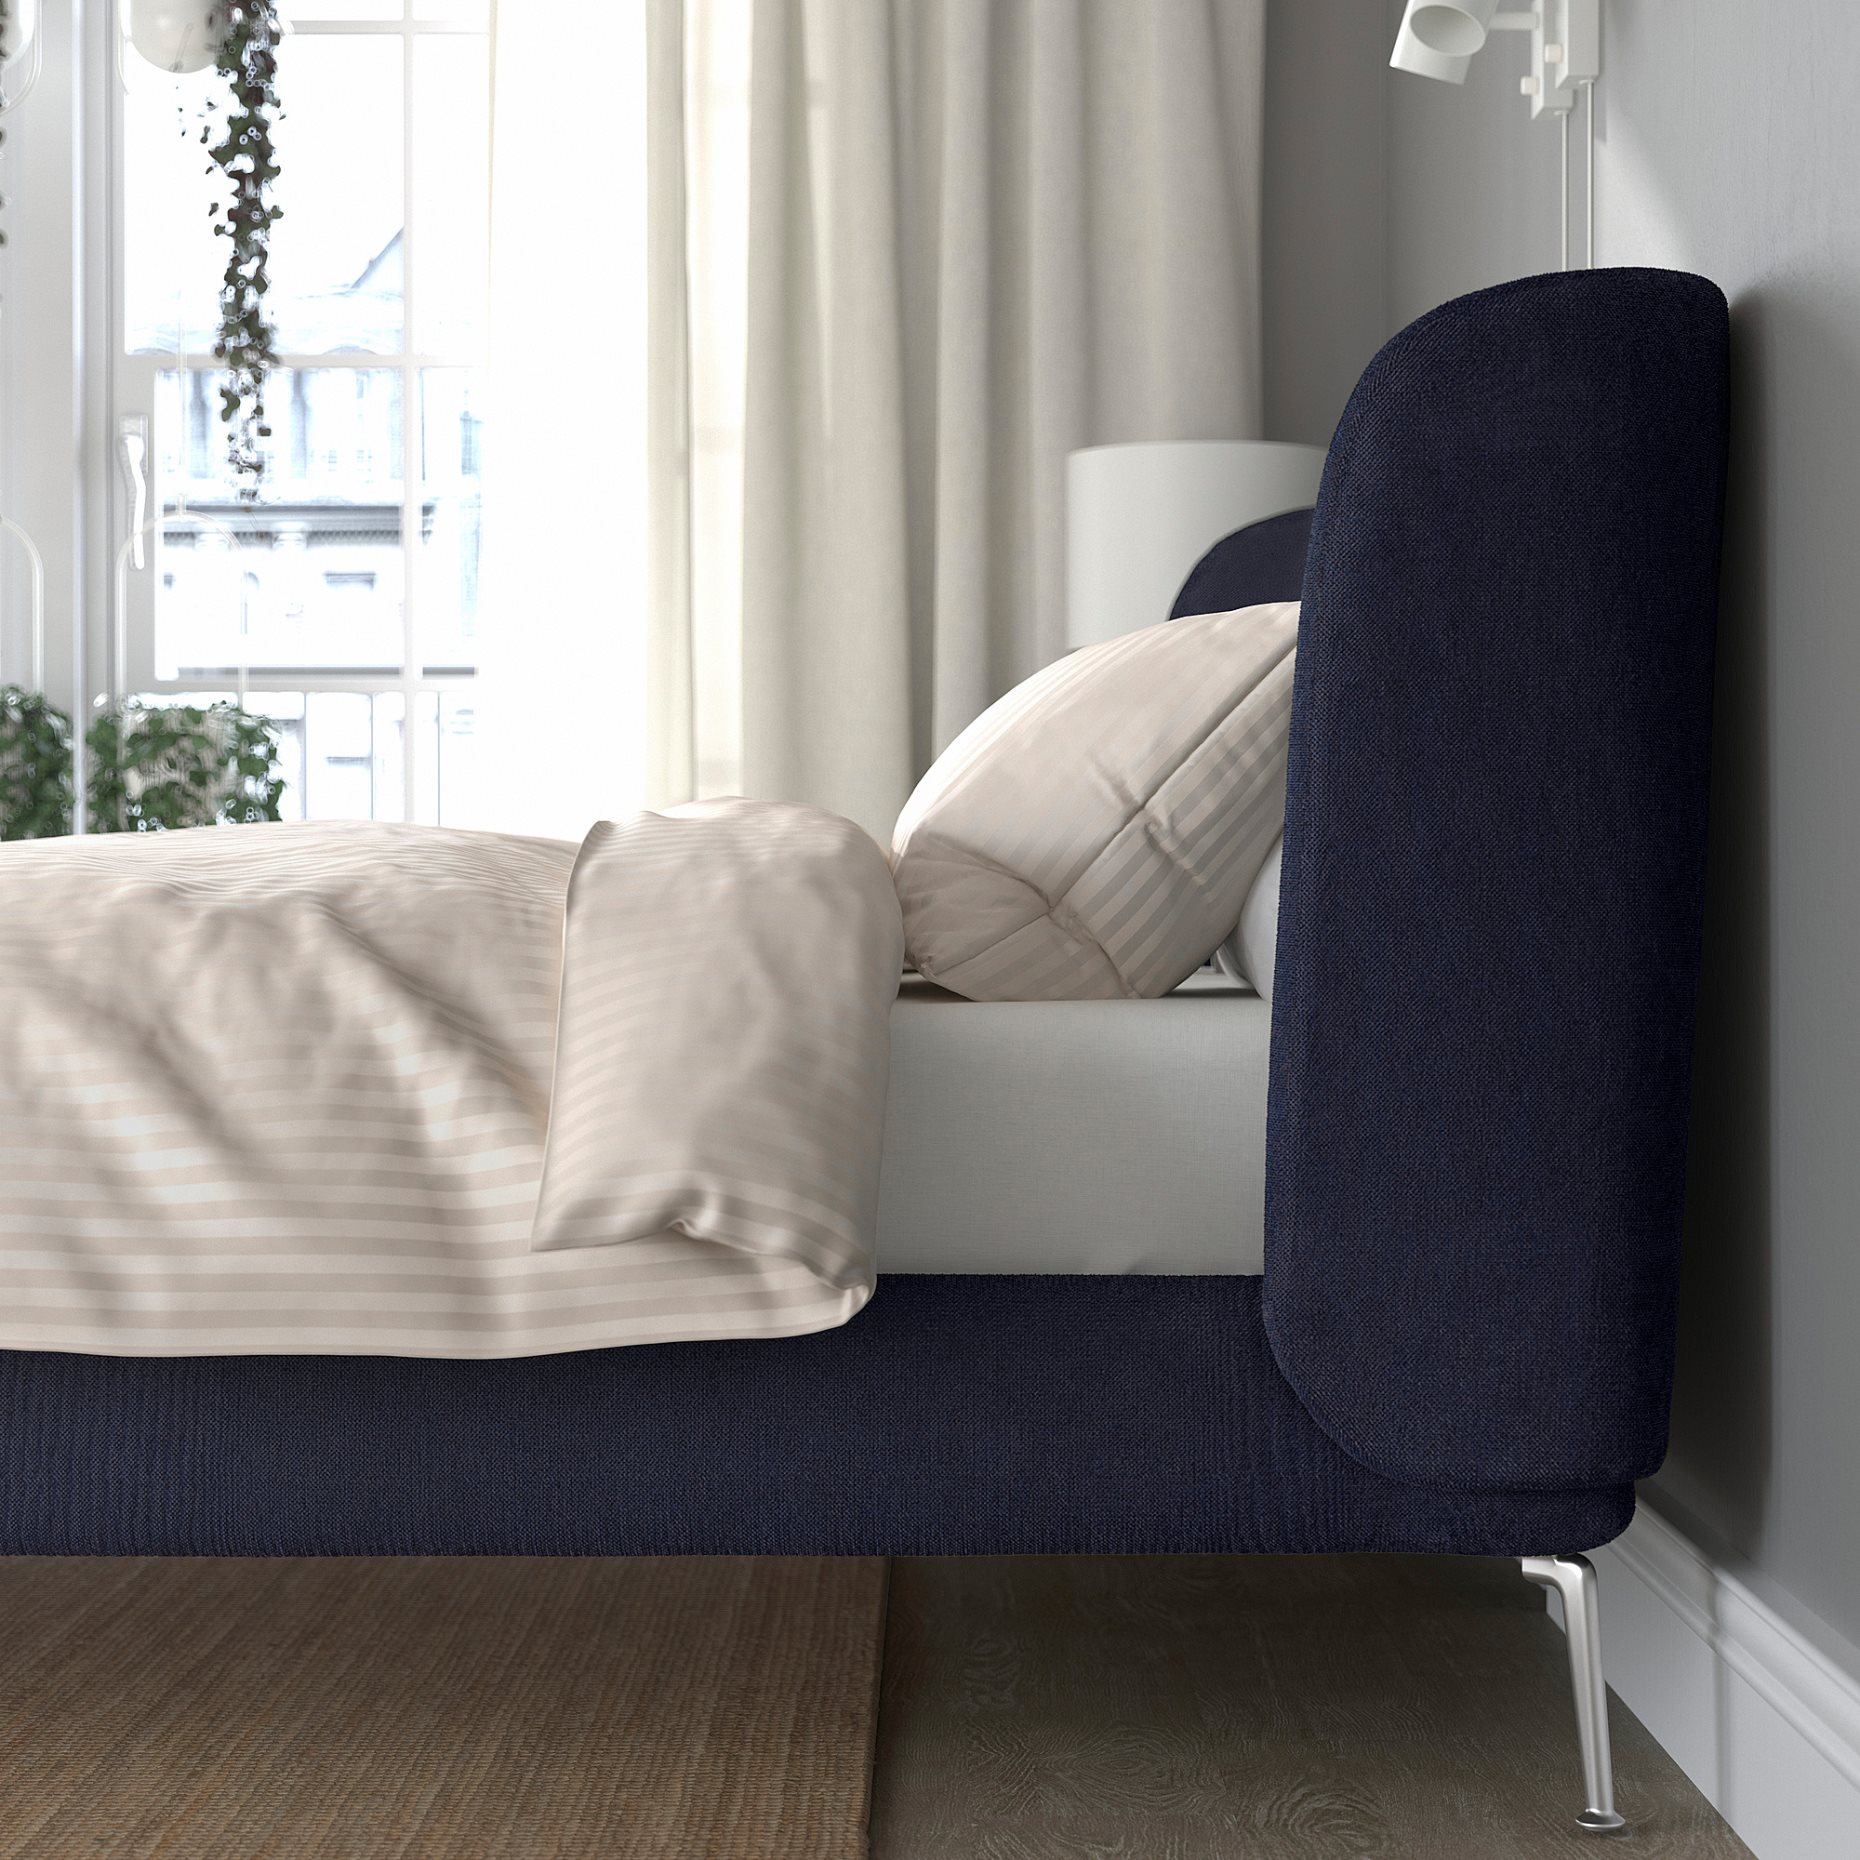 TUFJORD, κρεβάτι με επένδυση, 160x200 cm, 295.553.63